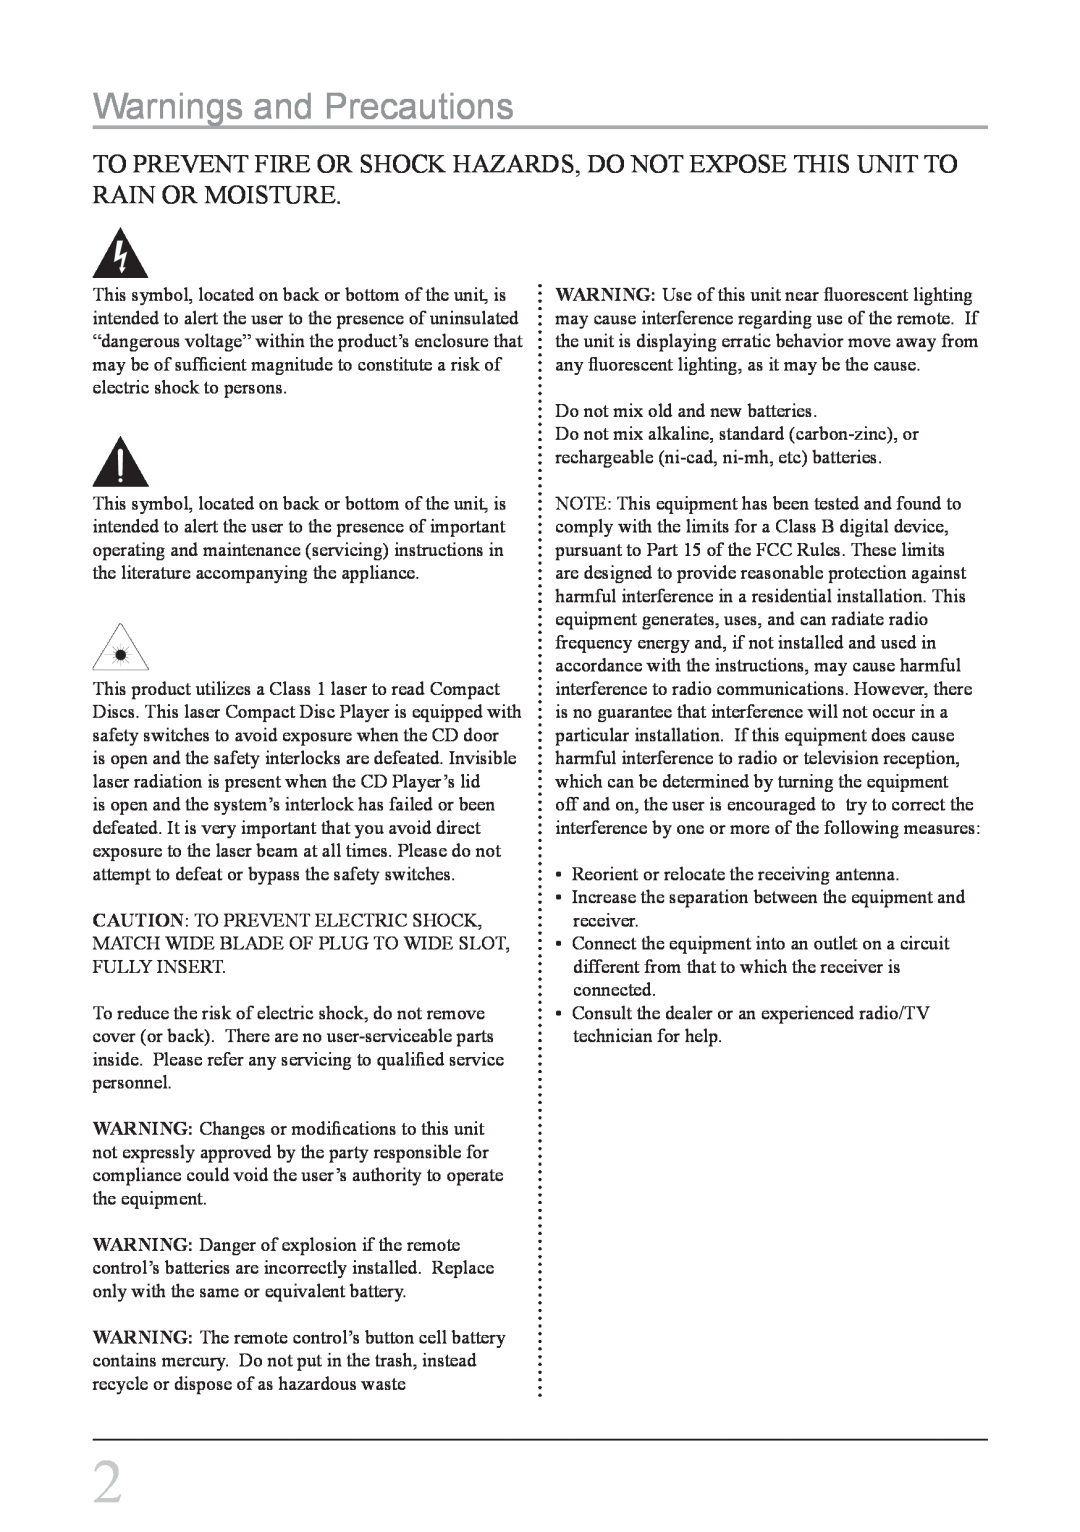 GPX HC208B instruction manual Warnings and Precautions 